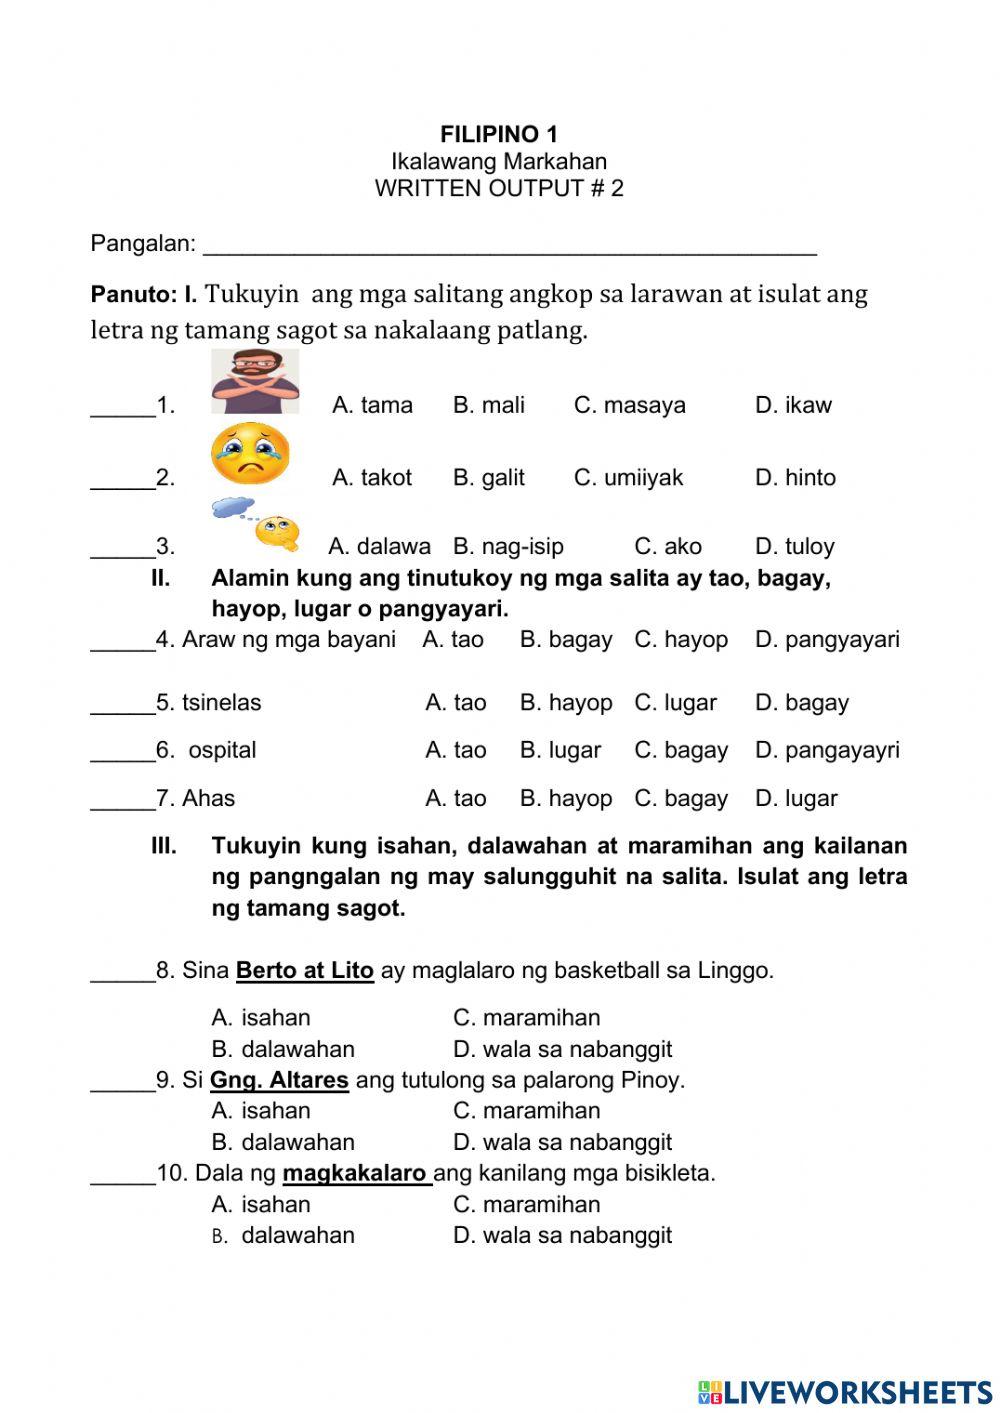 Filipino 1 written task 2